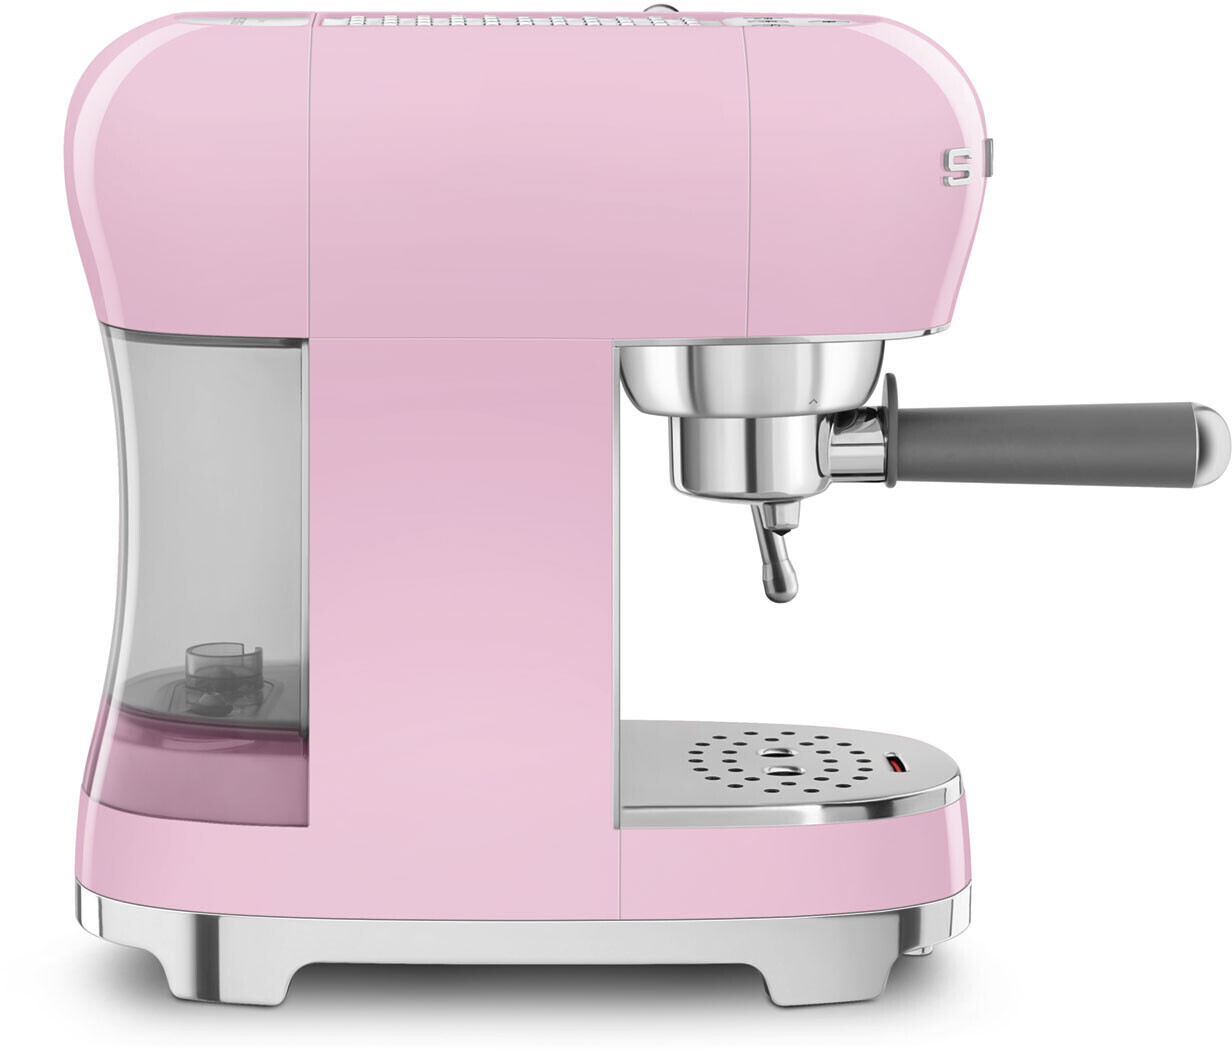 Smeg espresso machine with portafilter ECF01PKEU cadillac pink – Bohnenfee